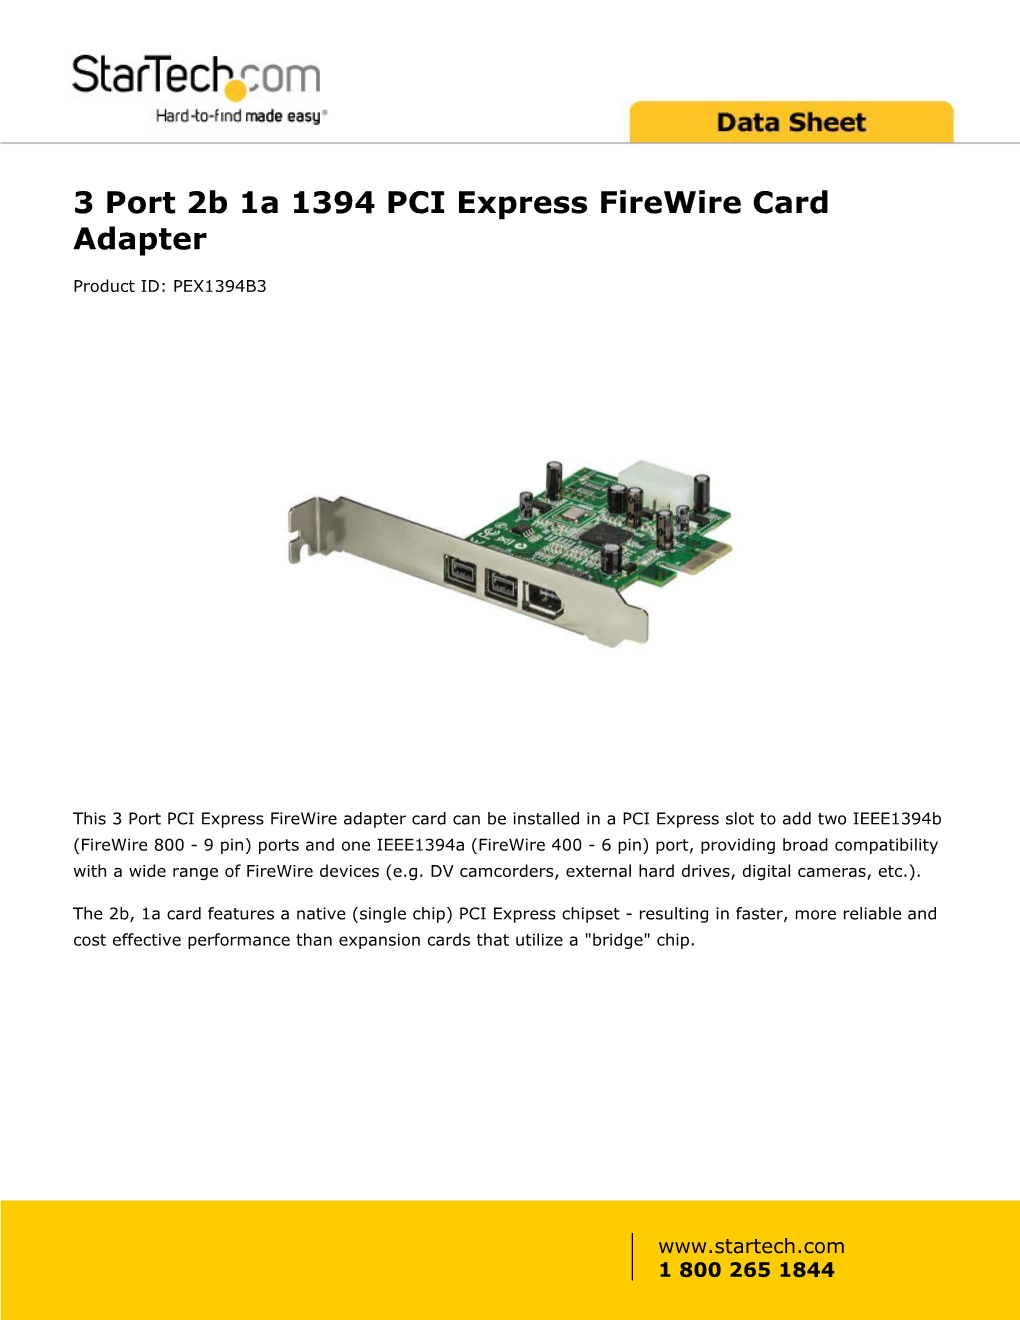 3 Port 2B 1A 1394 PCI Express Firewire Card Adapter